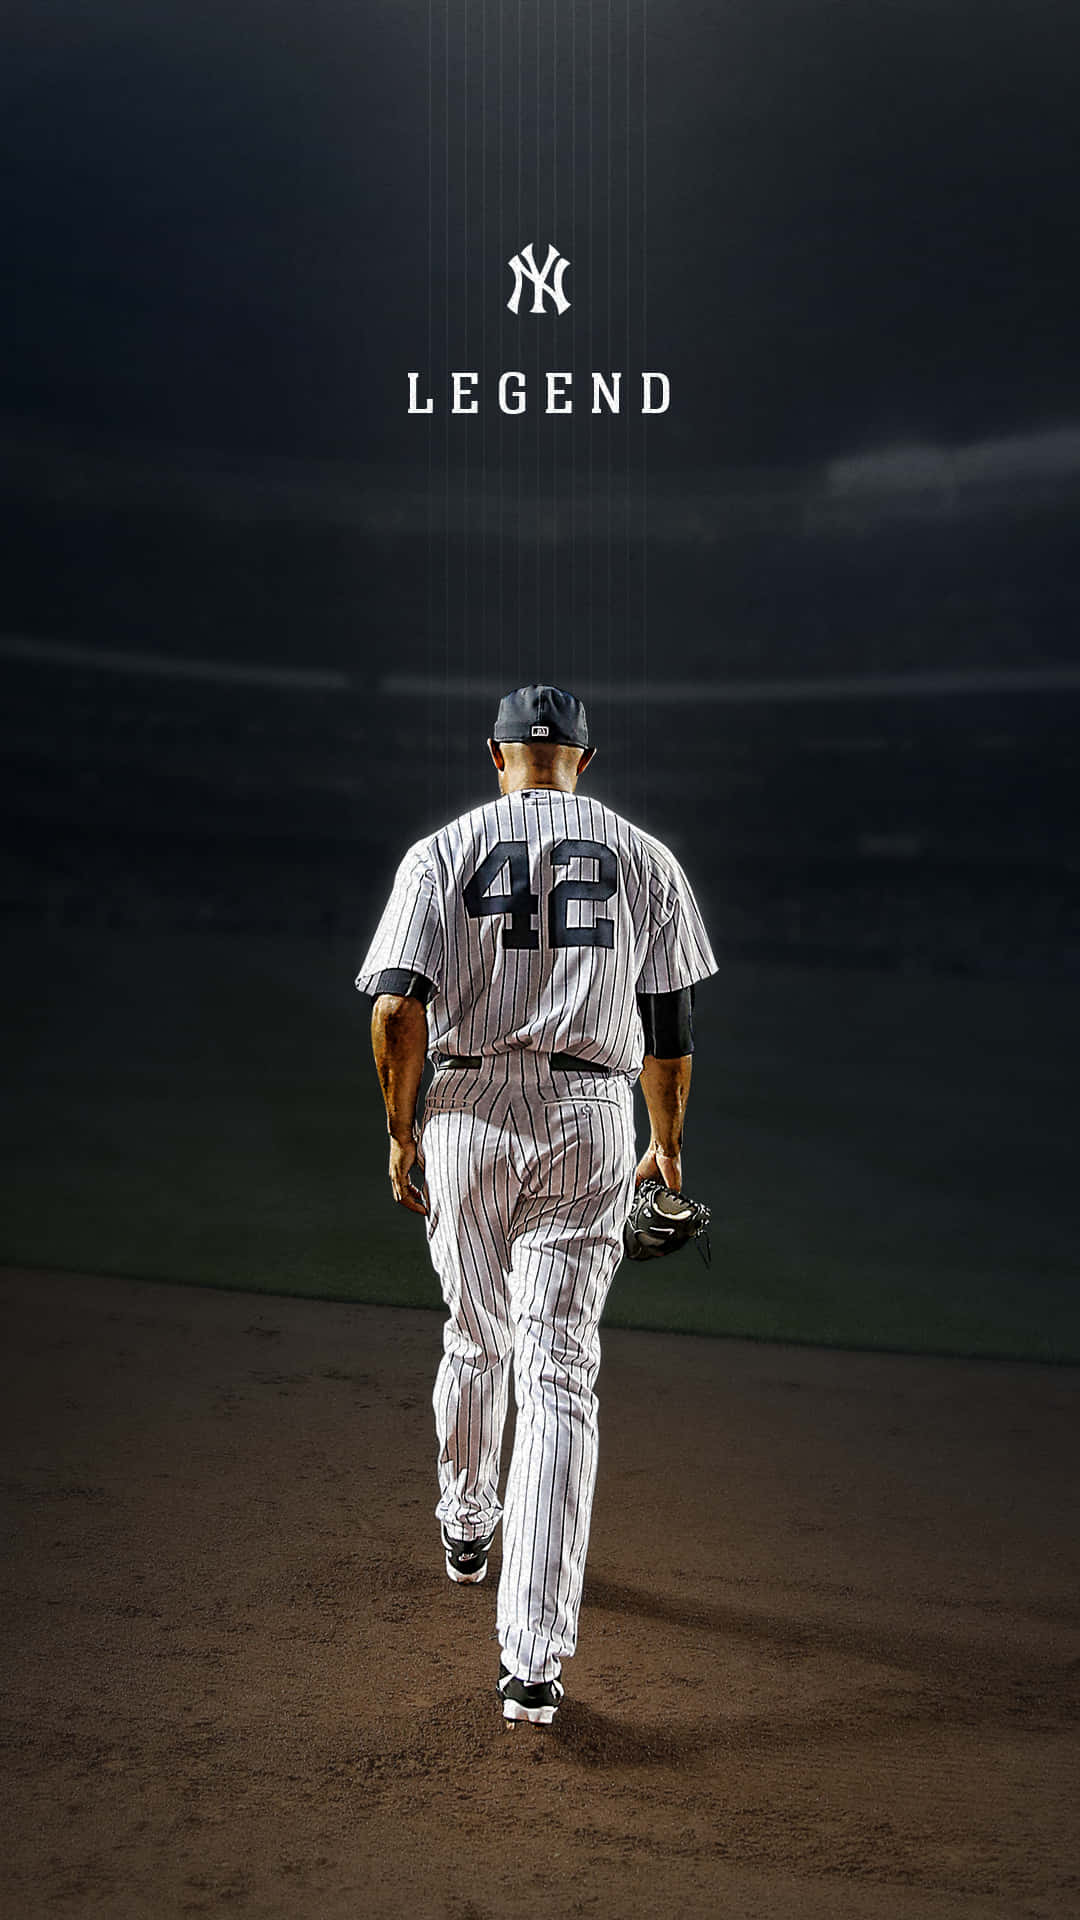 Et kig på NY Yankees ikoniske logo Wallpaper